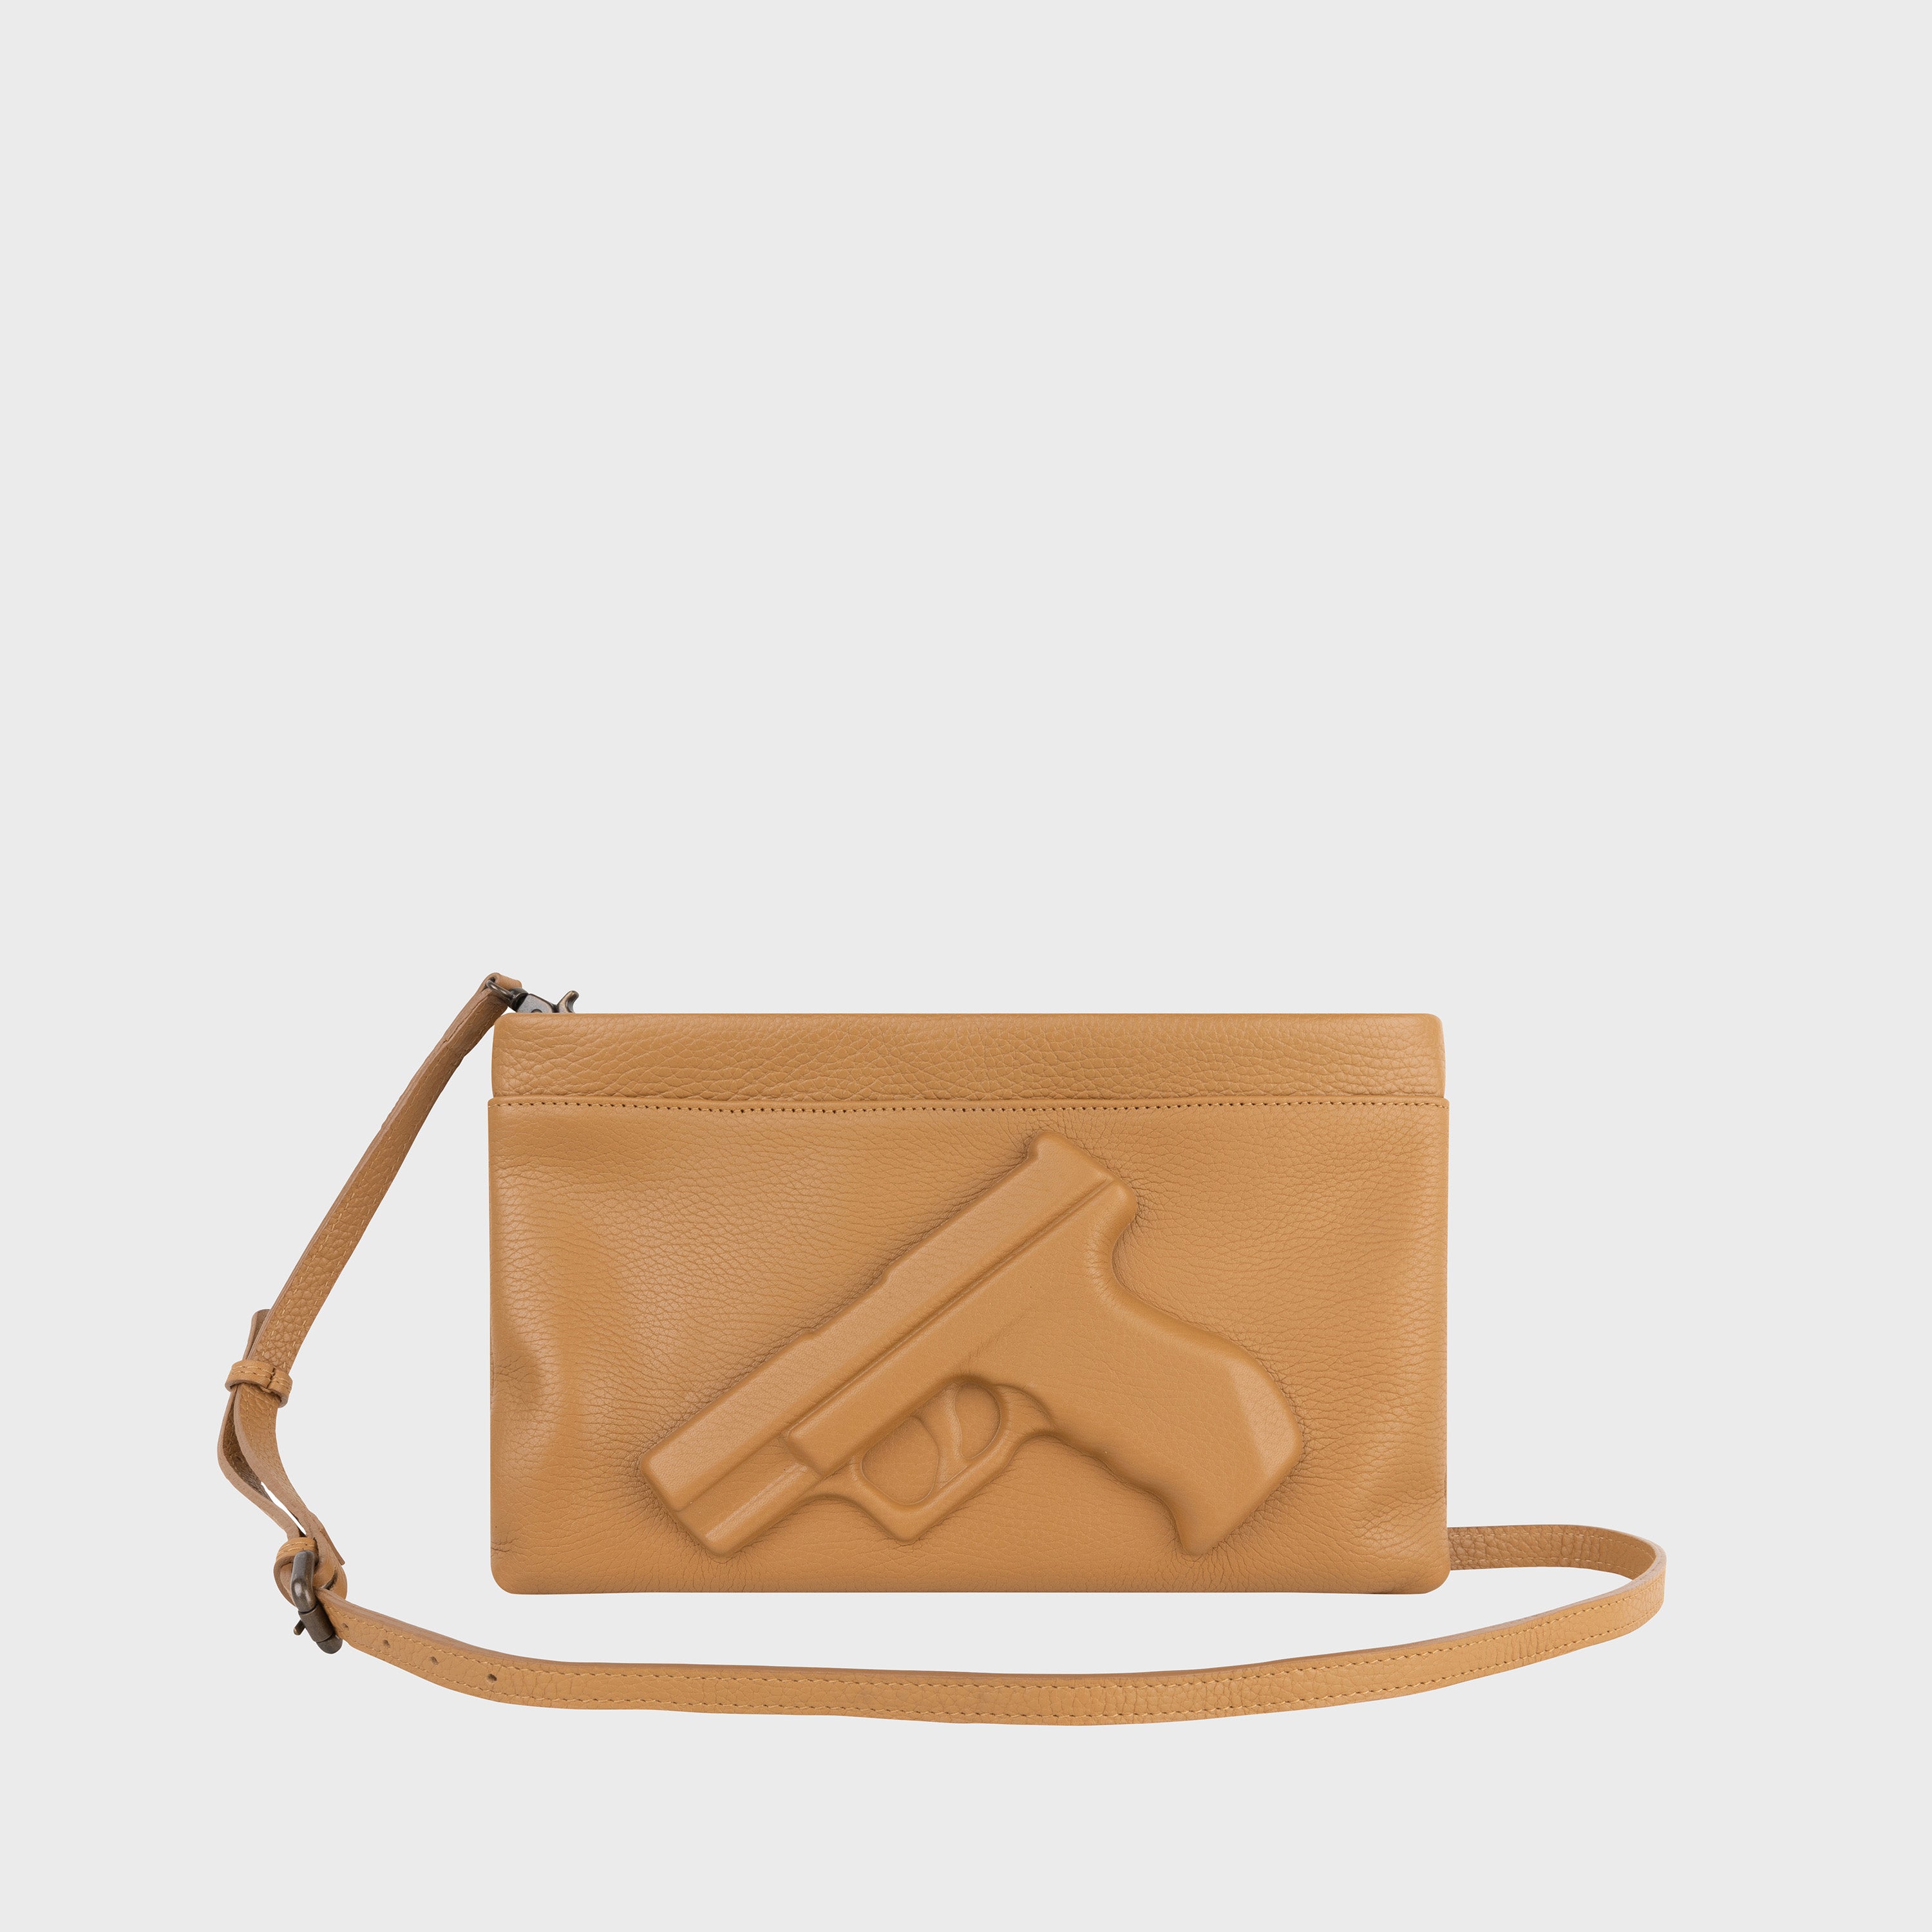 Small bag / Clutch